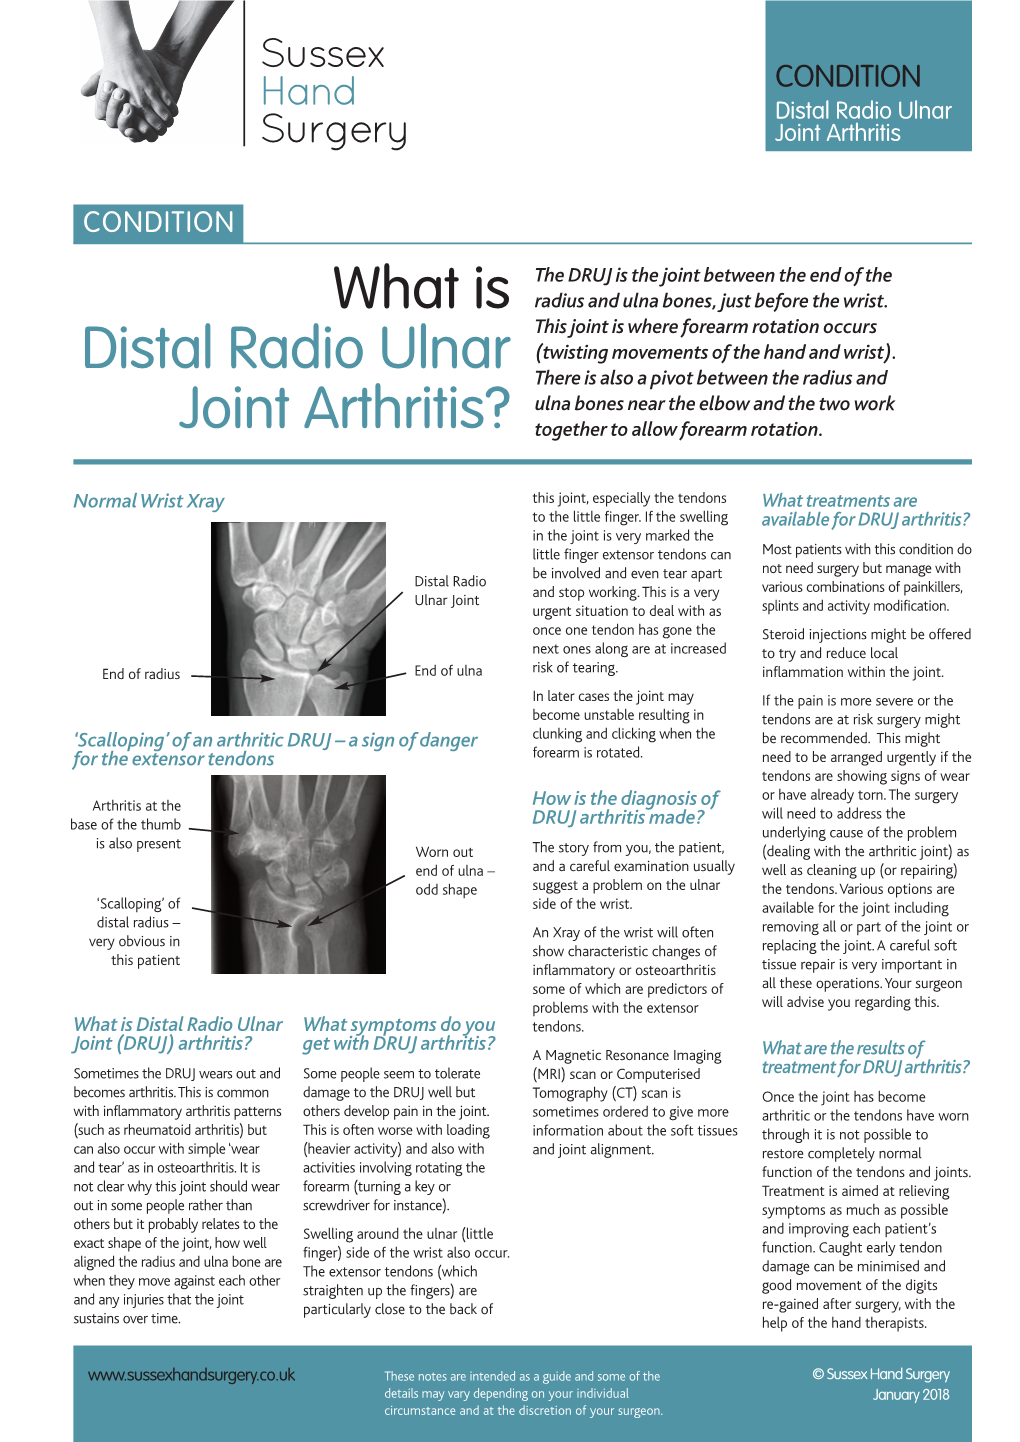 What Is Distal Radio Ulnar Joint Arthritis?